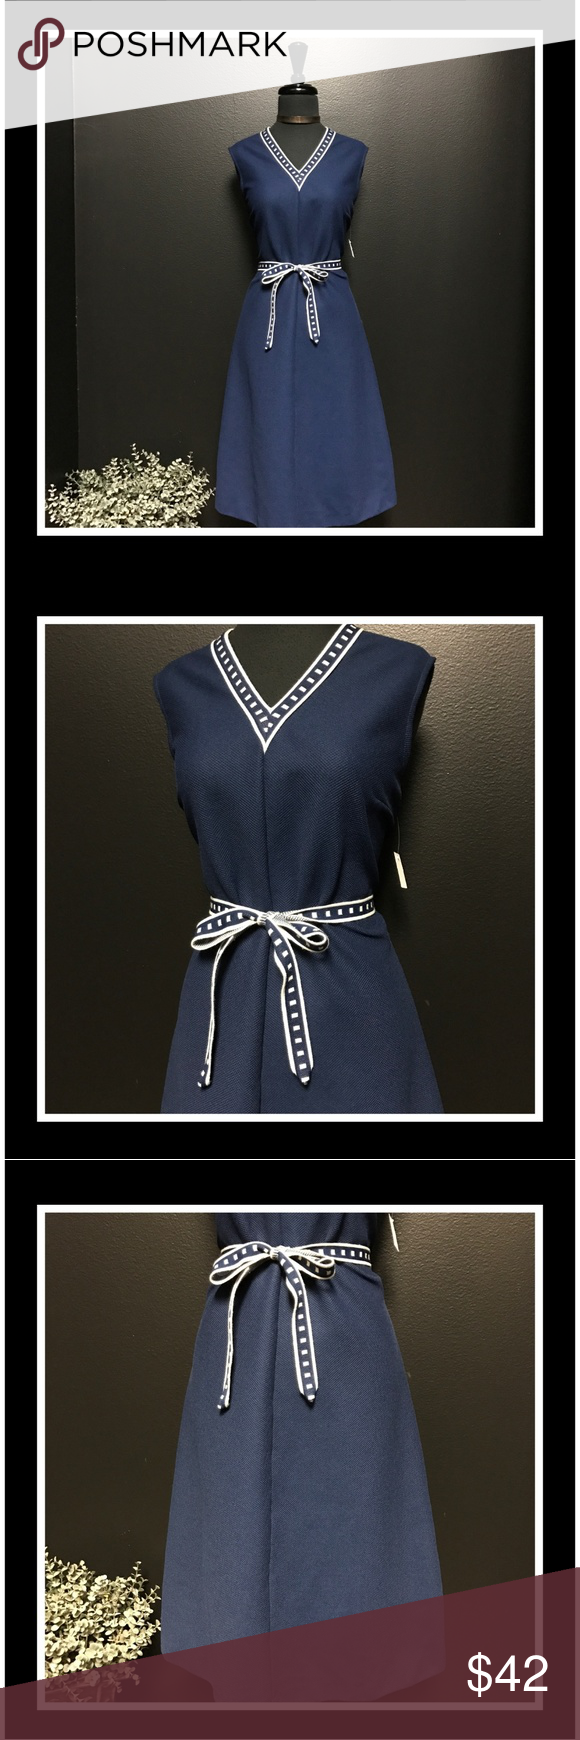 Blue dress with belt | Dresses, Blue dresses, Clothes design